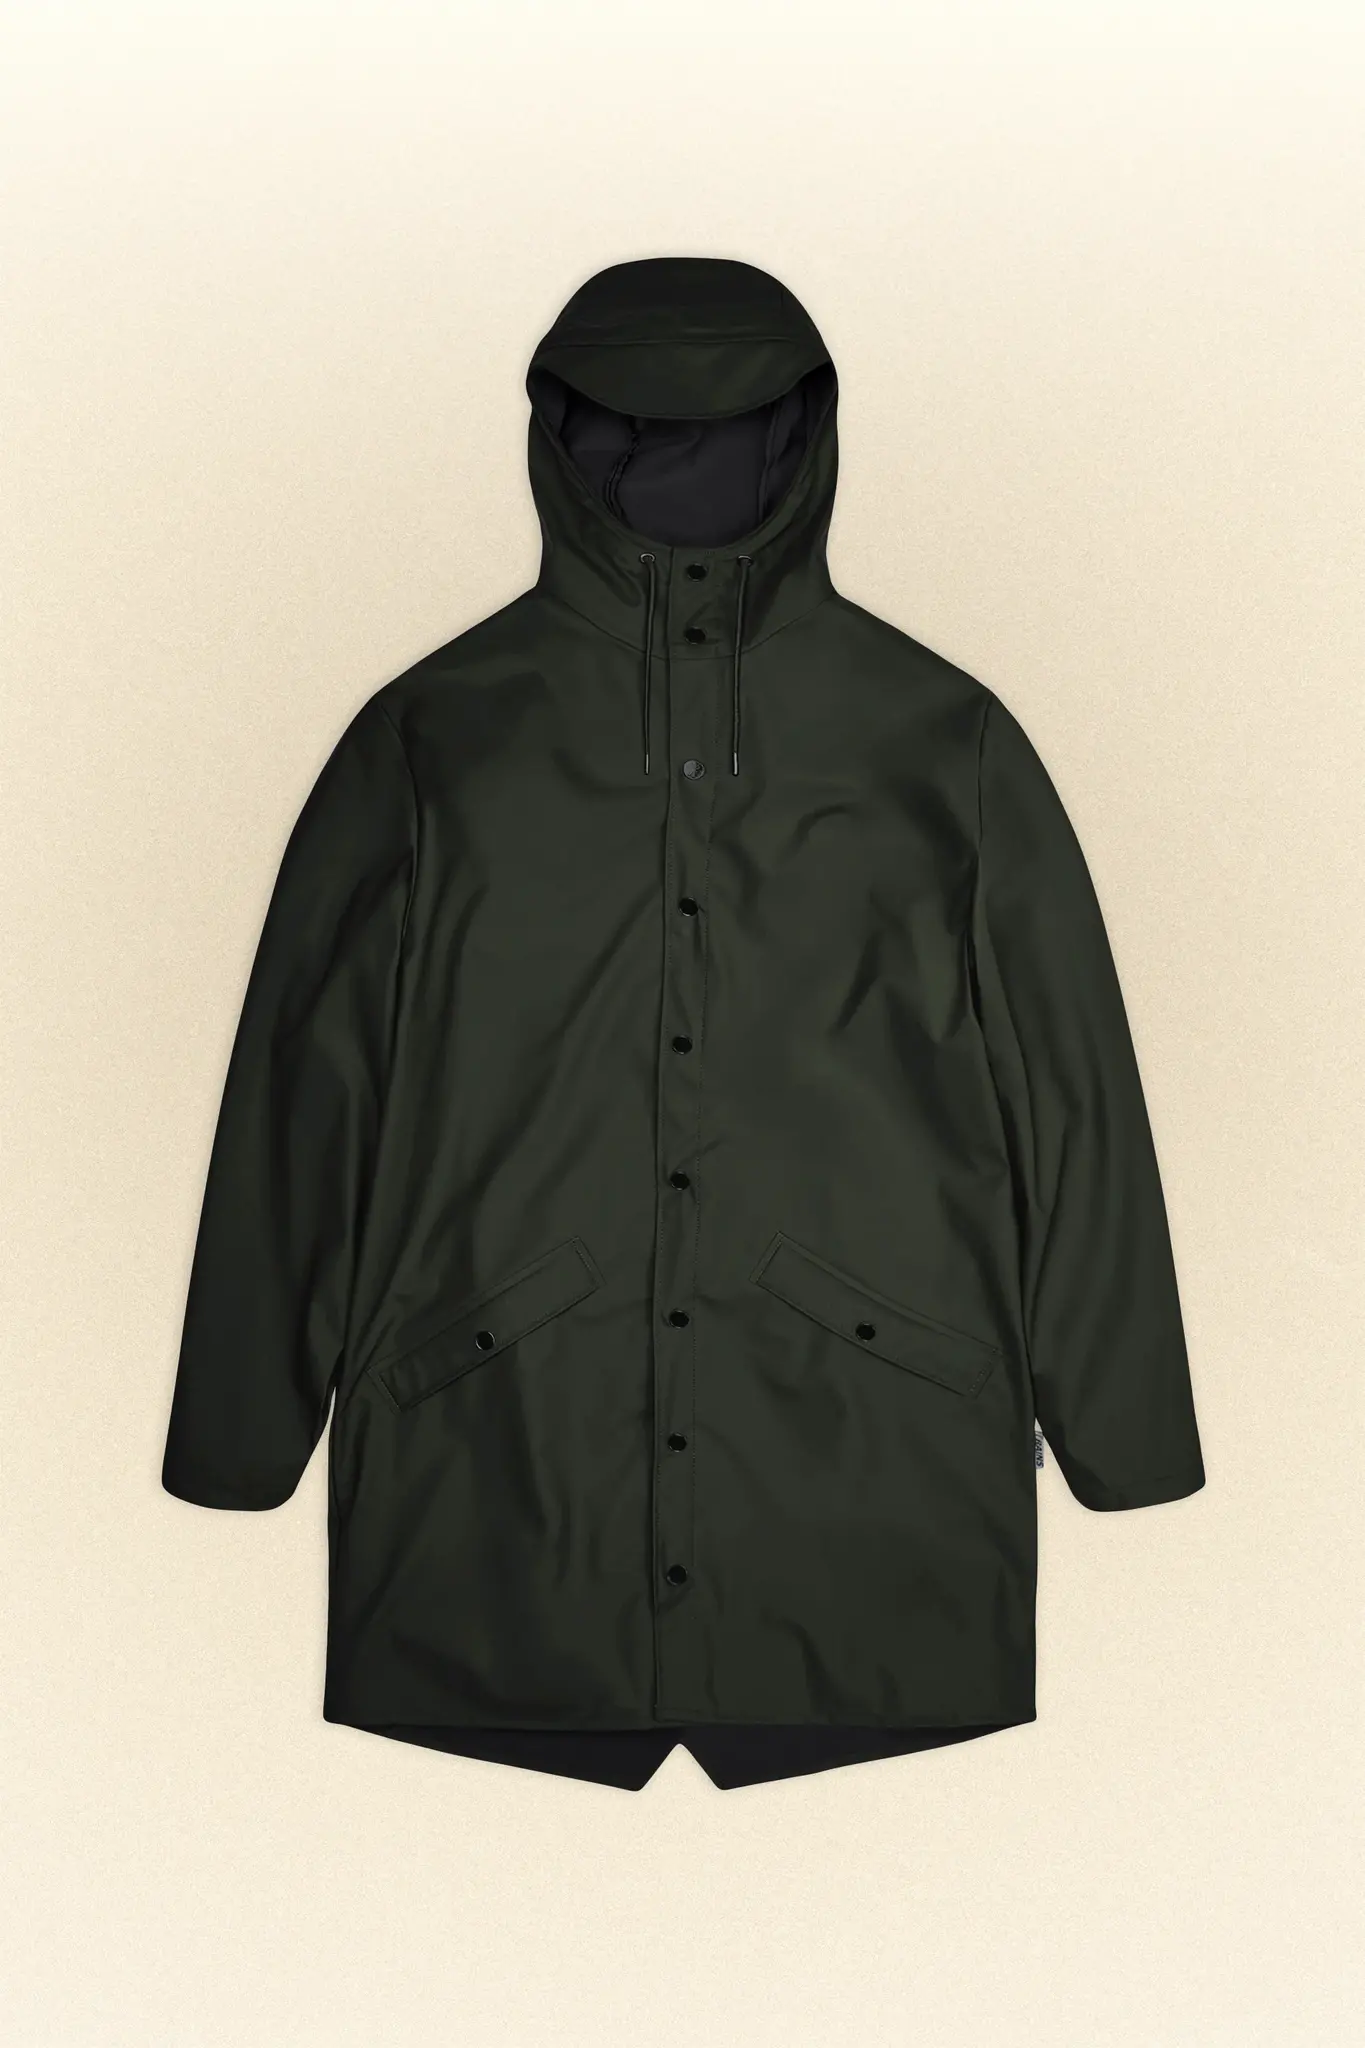 Rains 12020 long jacket evergreen